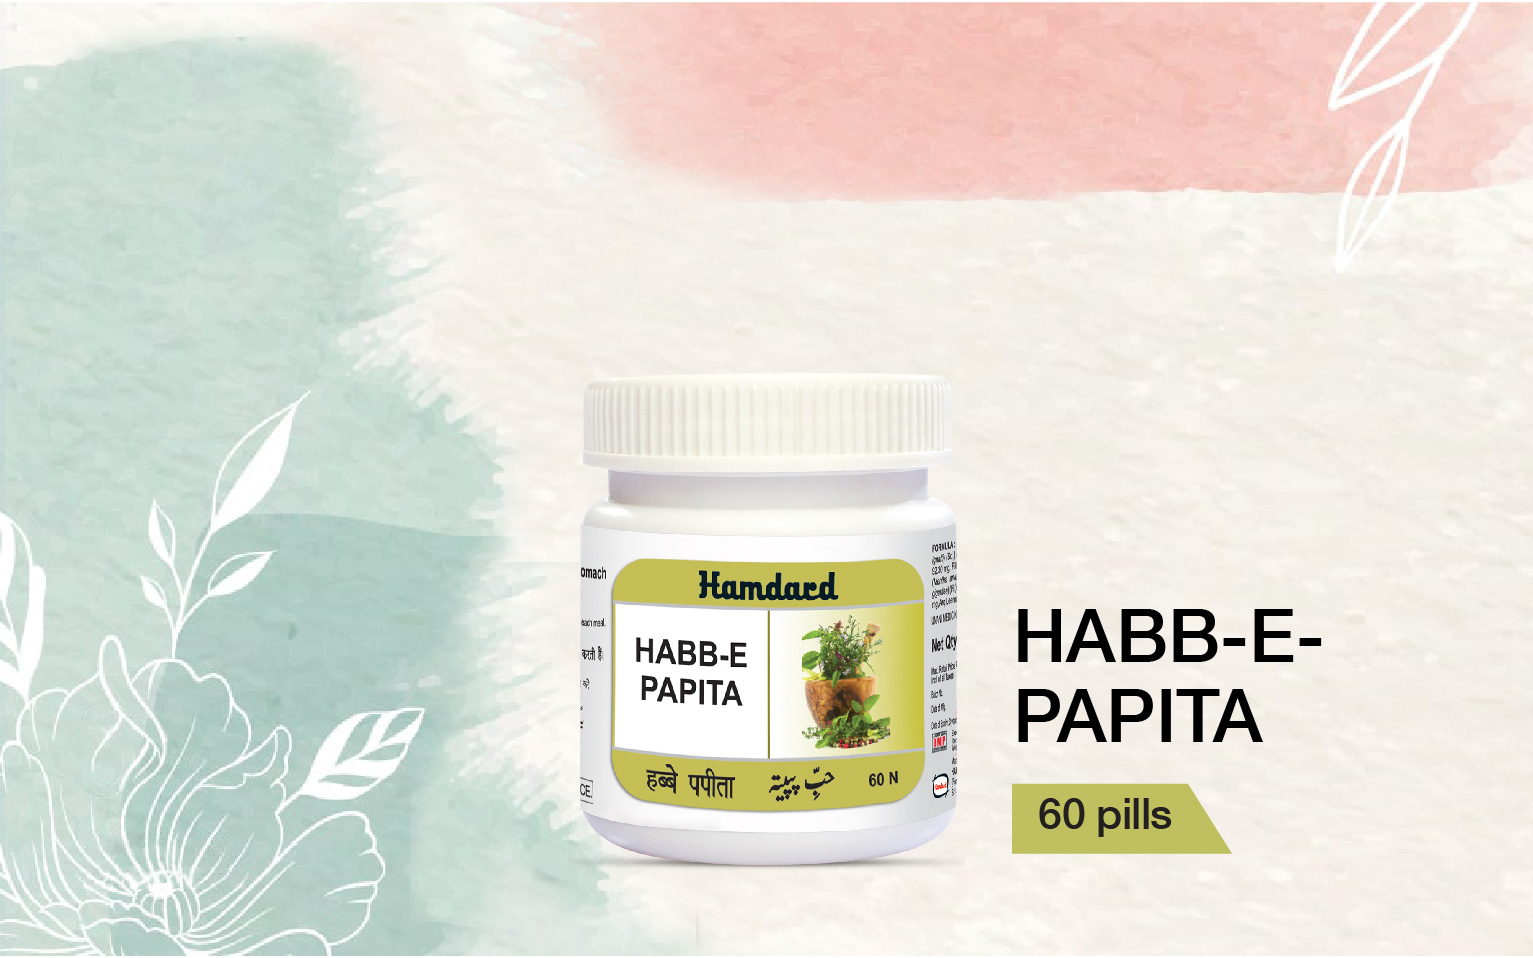 HABB-E-PAPITA